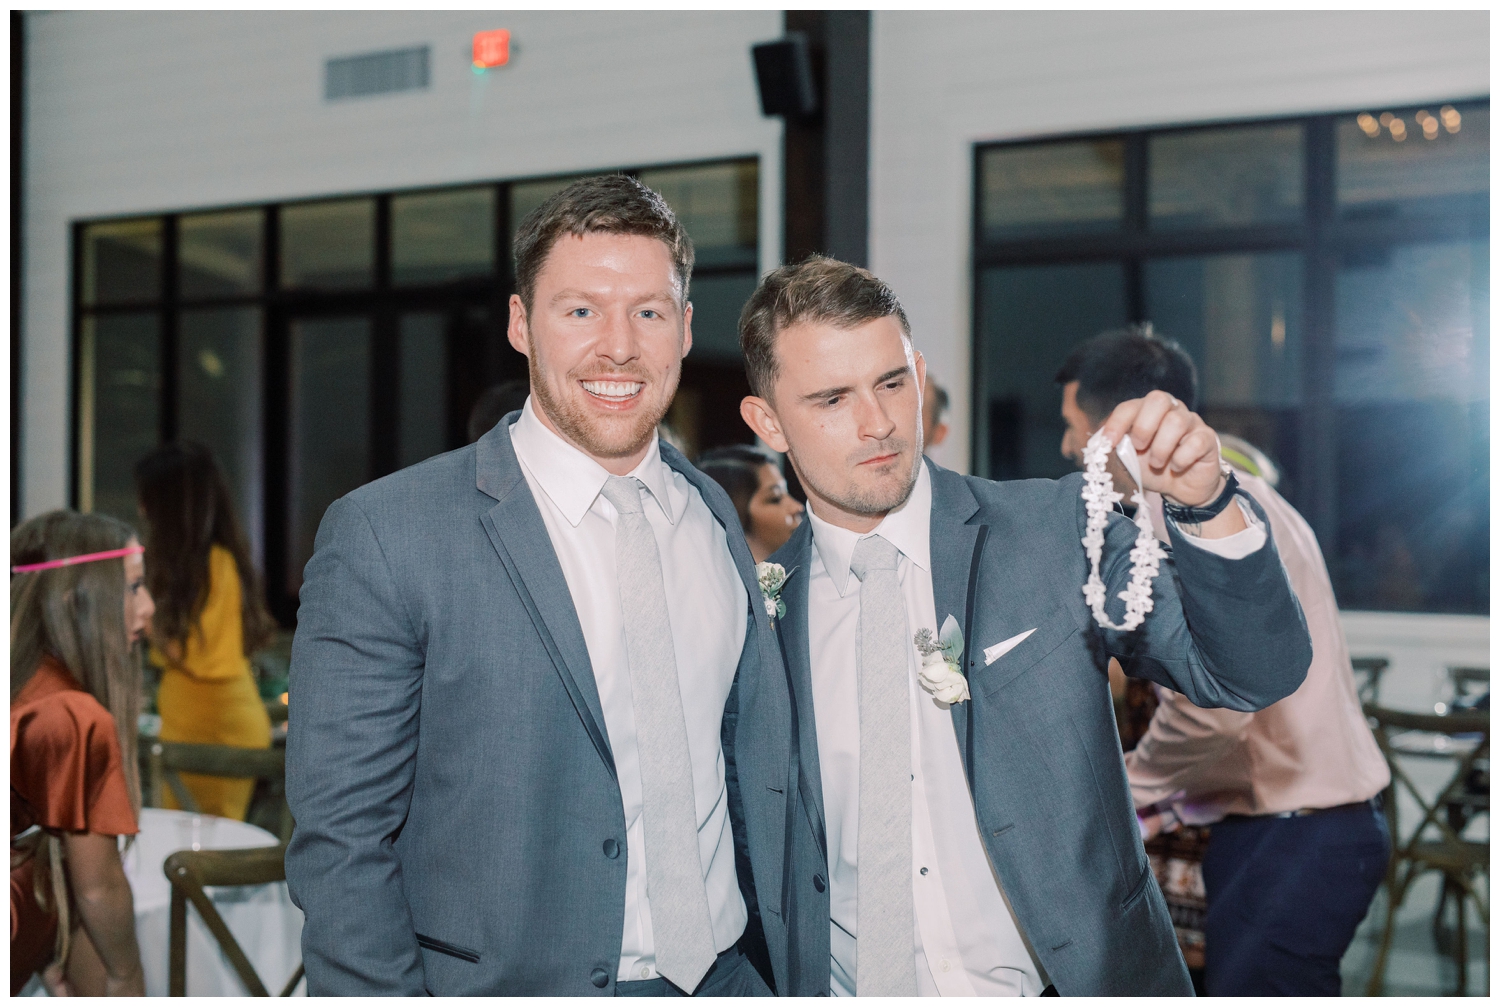 garter toss at wedding ceremony in Bryan, Texas